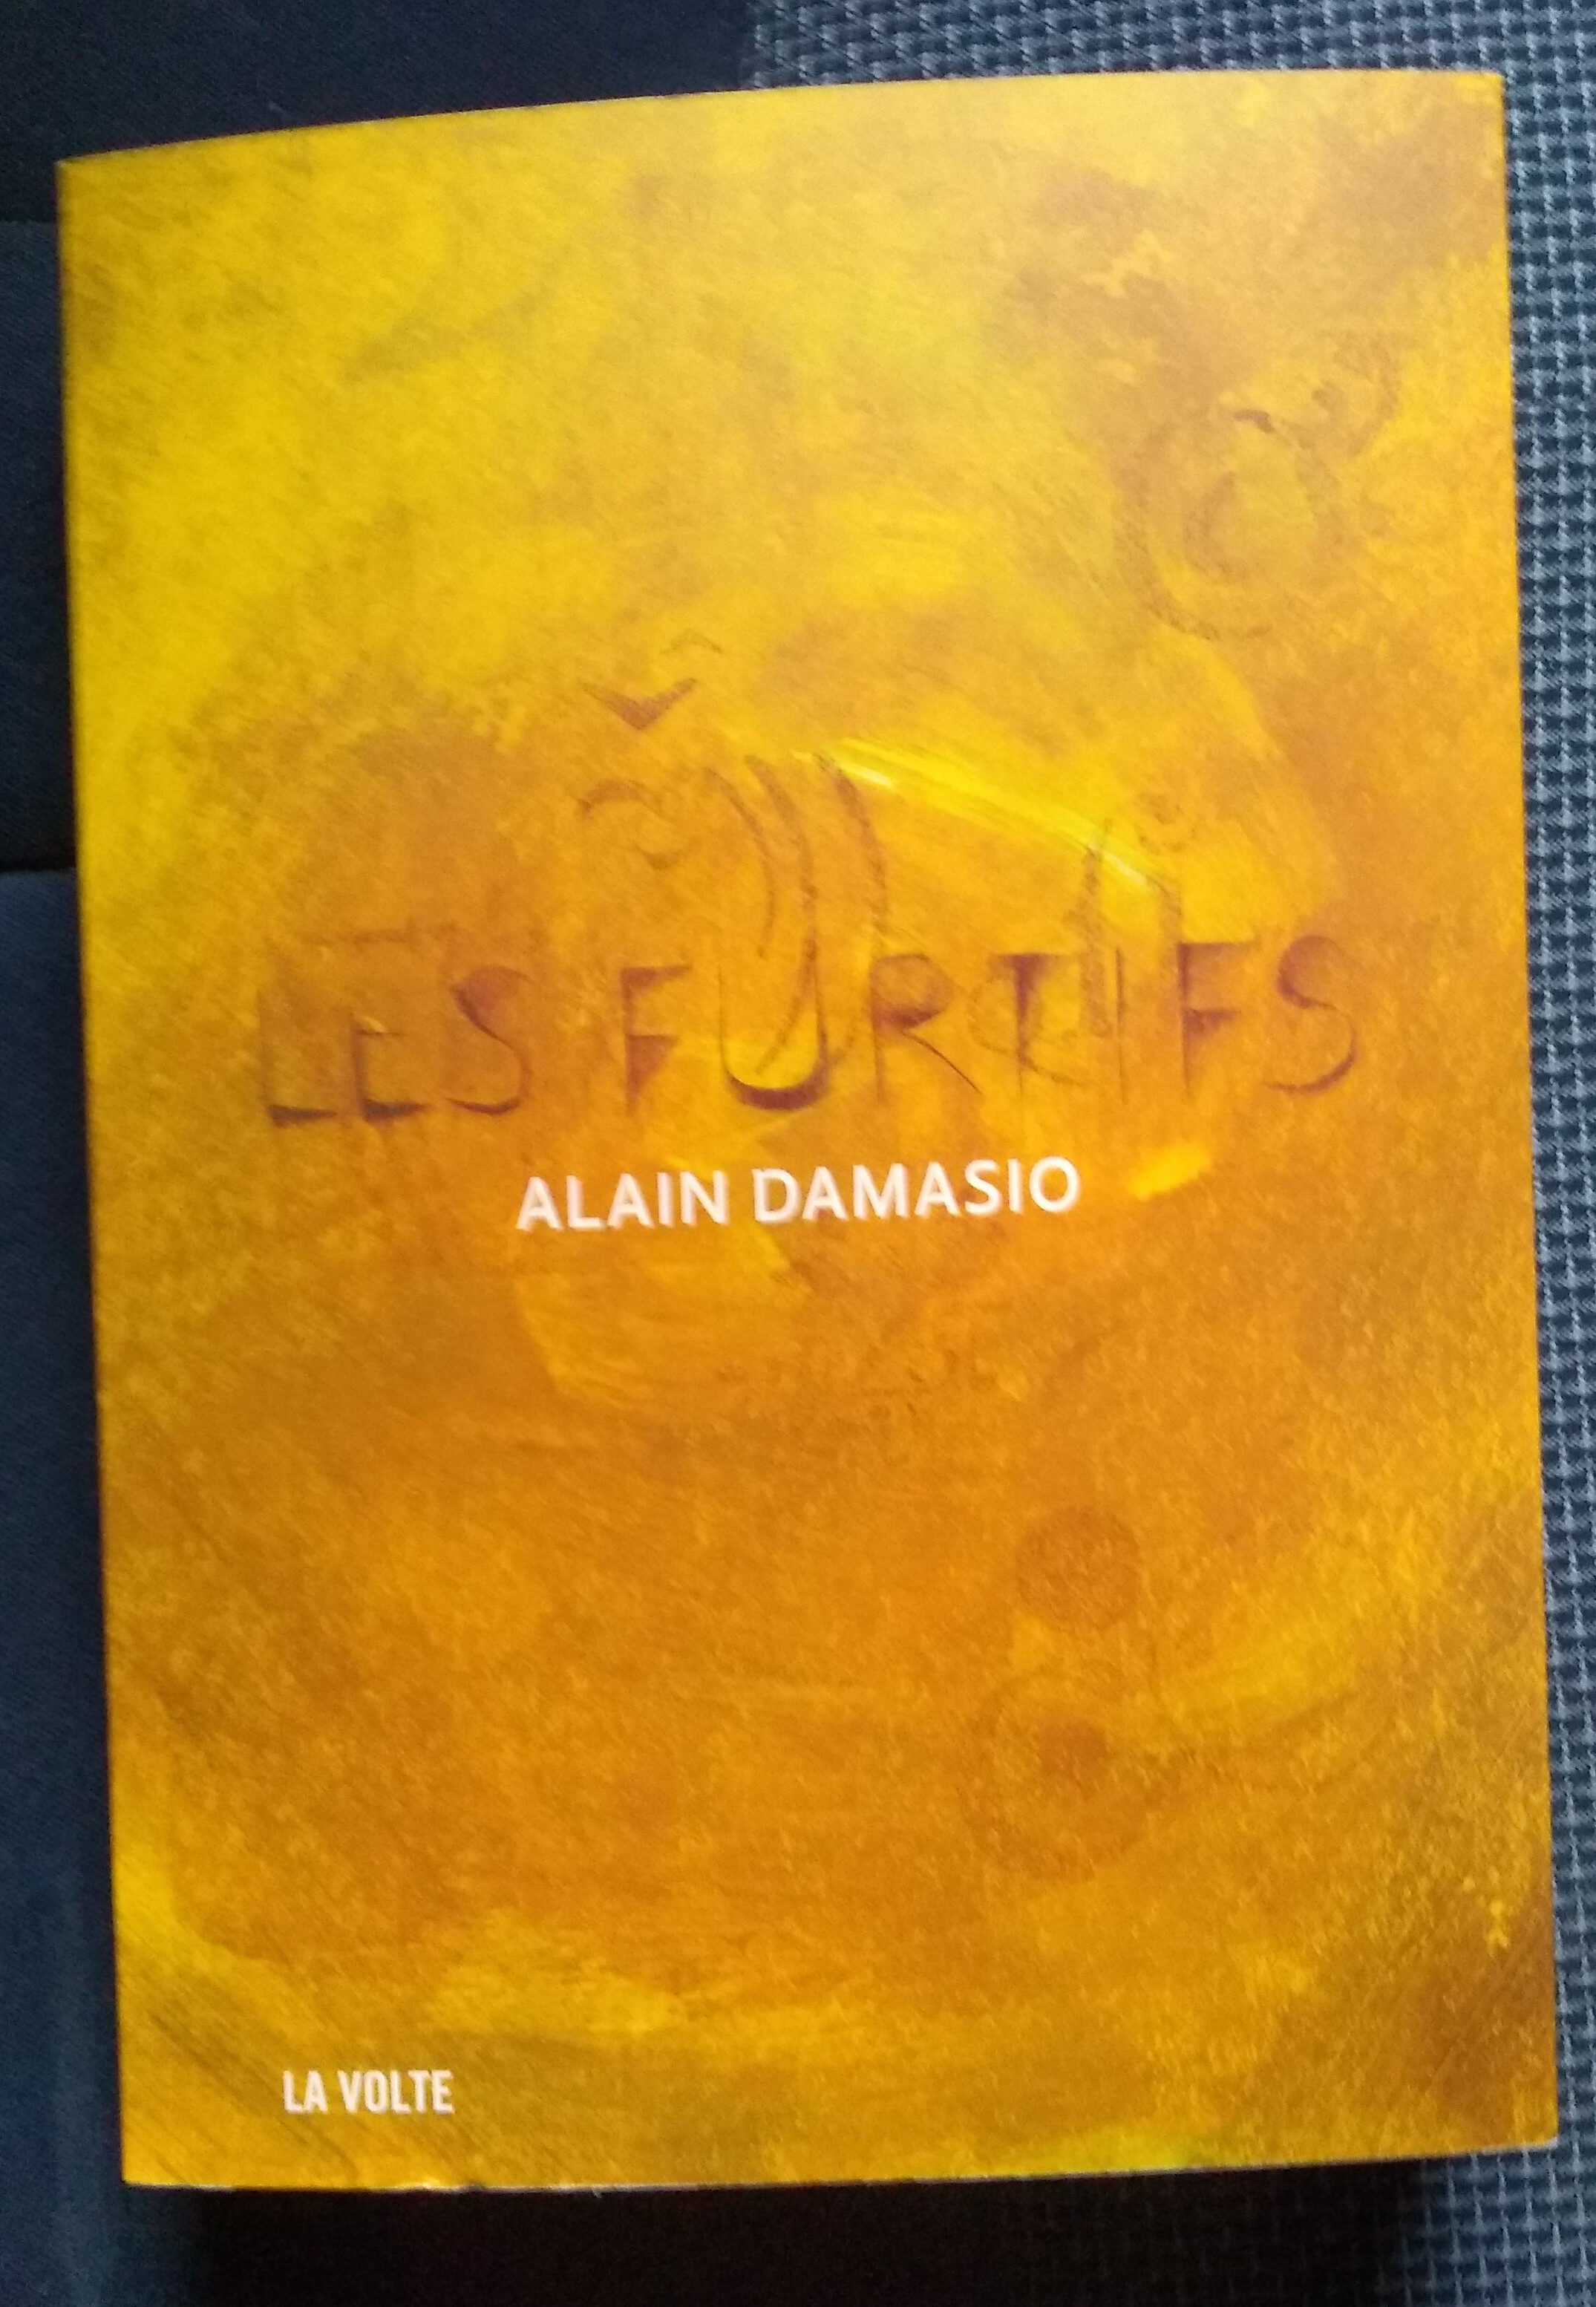 Les Furtifs - Alain Damasio - Produit - fr